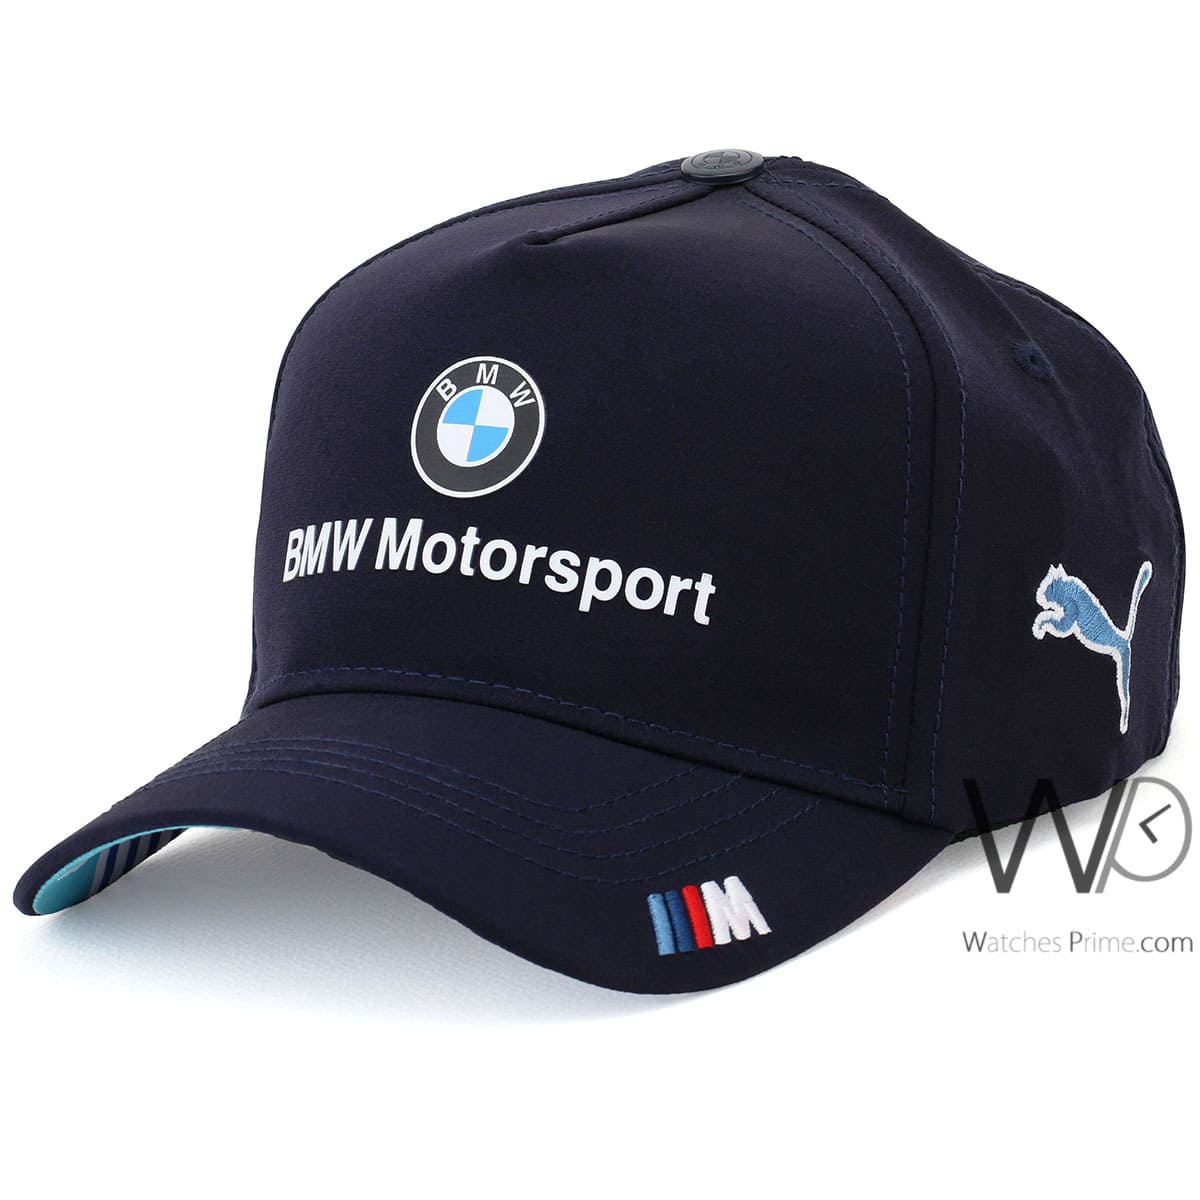 BMW Motor Sport Navy Blue Baseball Cotton Cap | Watches Prime